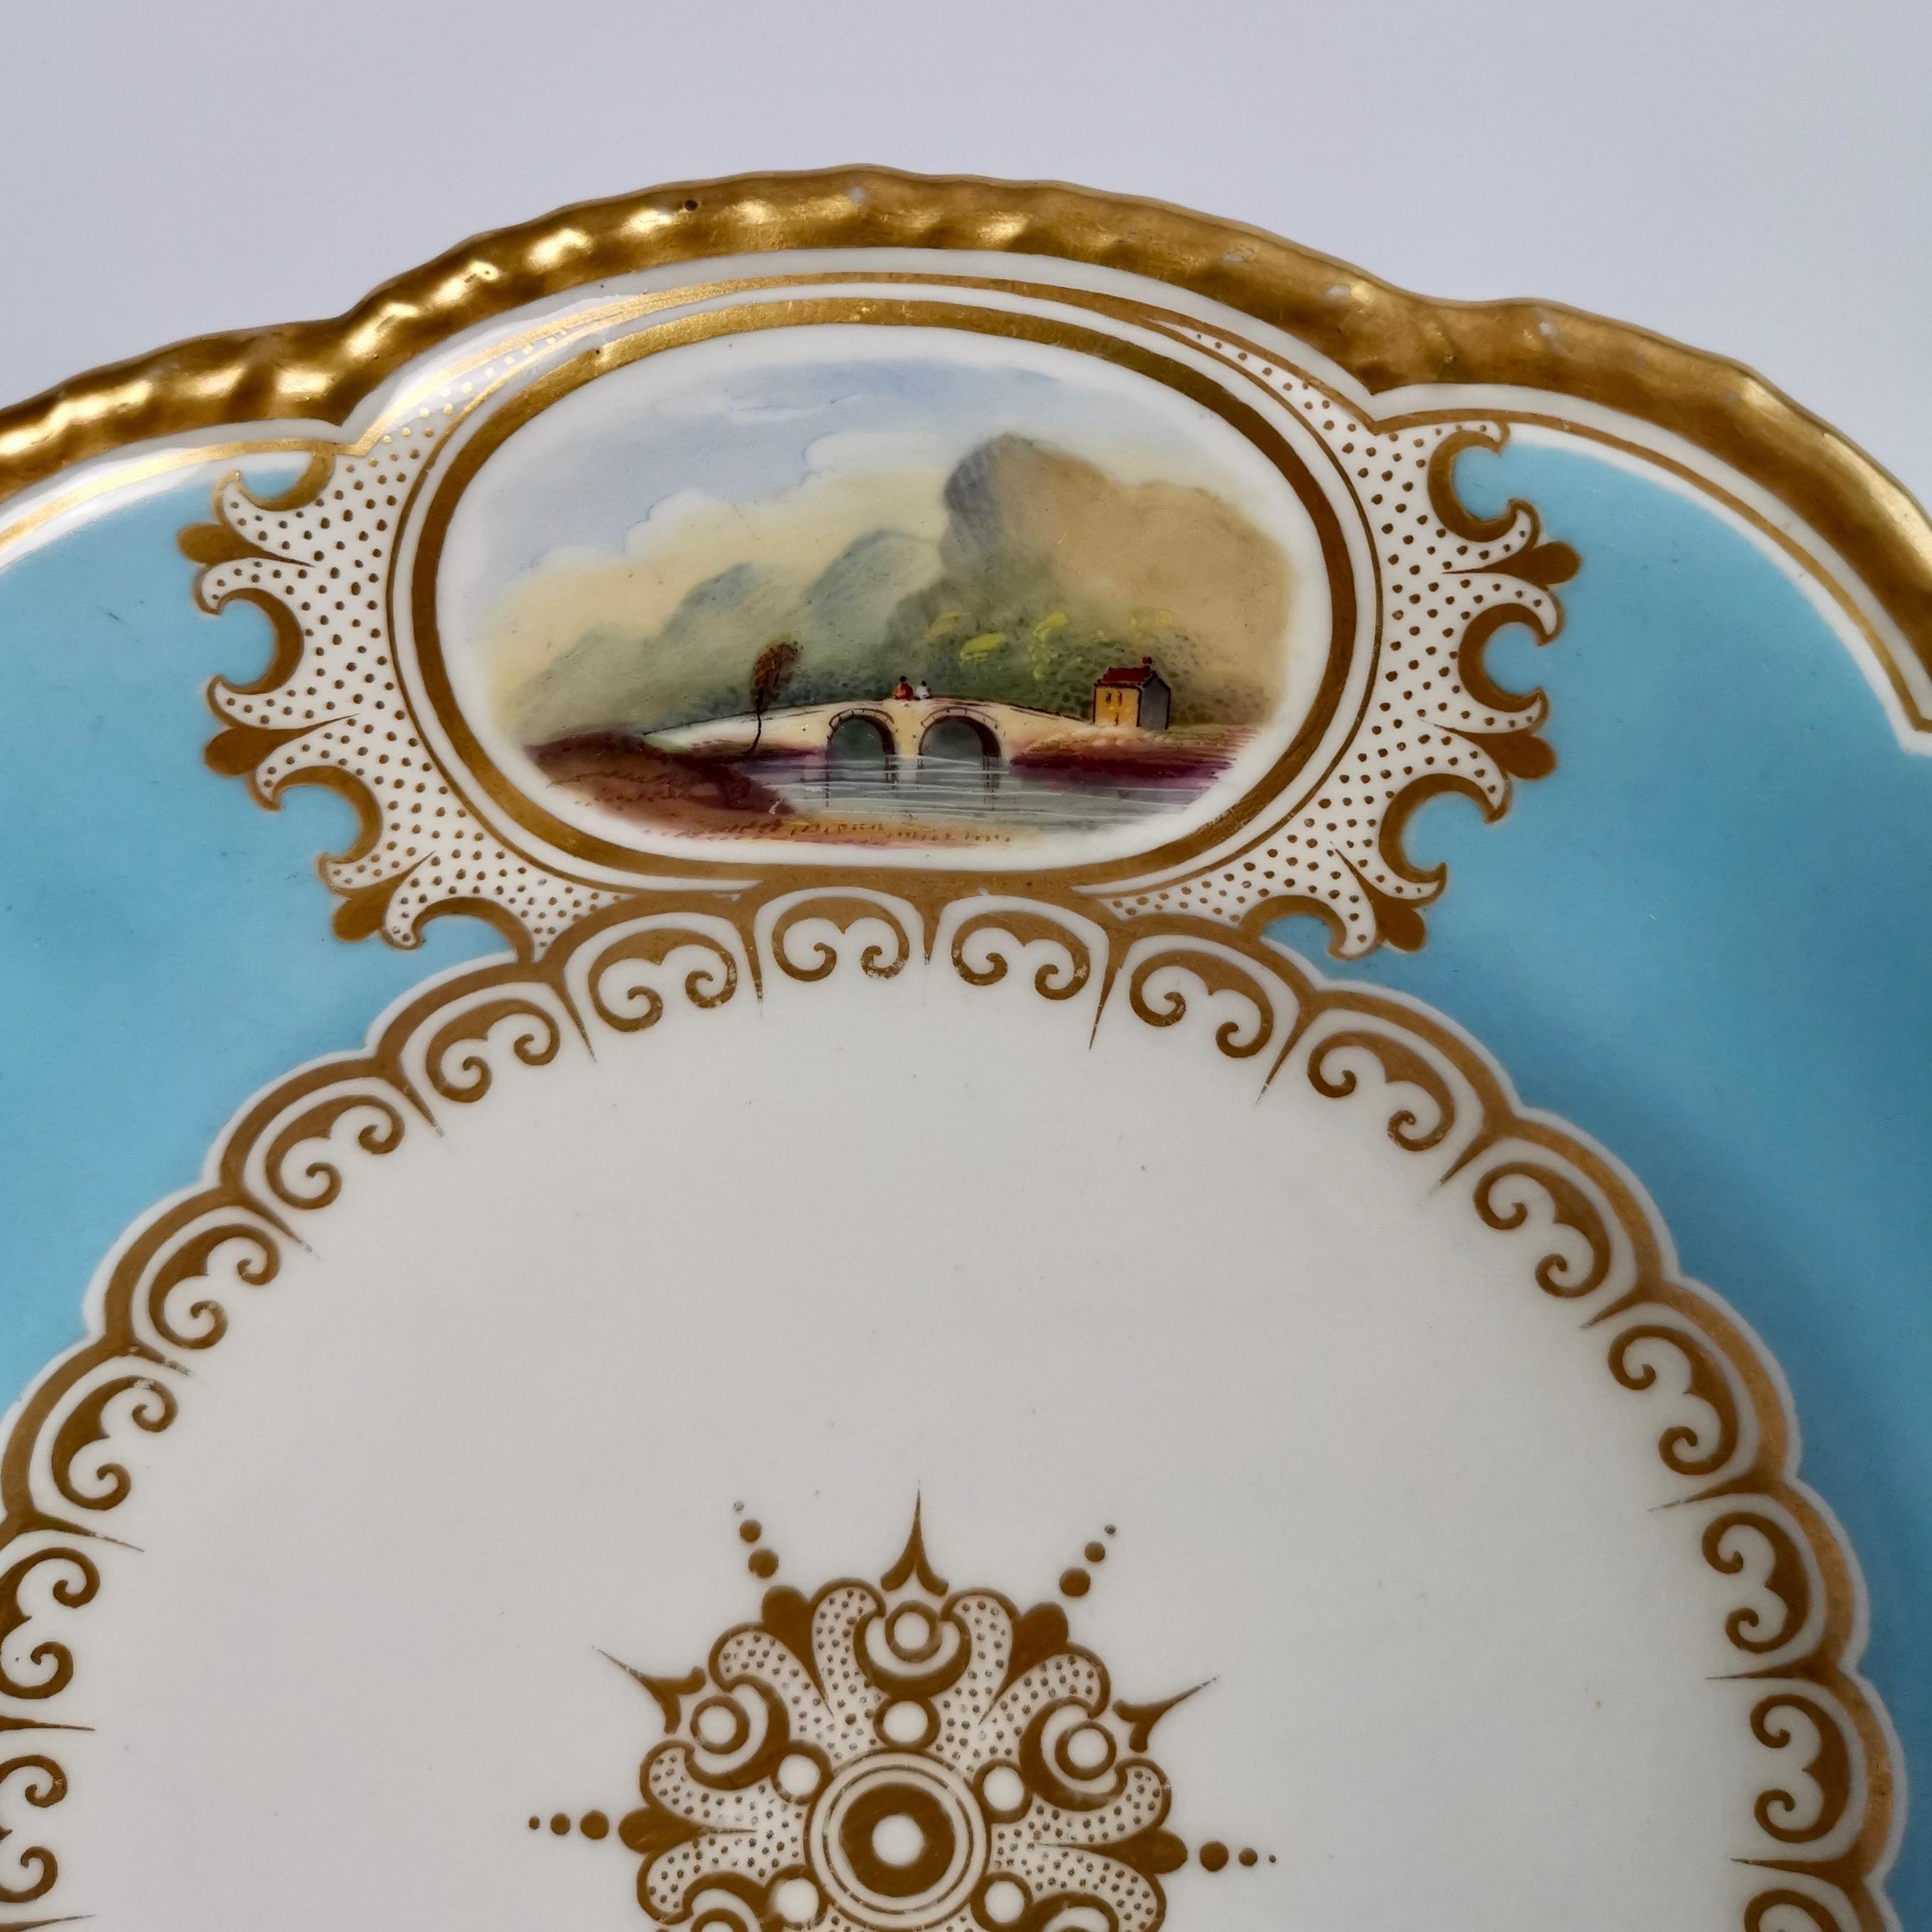 Hand-Painted Grainger Worcester Porcelain Plate, Sky Blue with Landscapes, Victorian